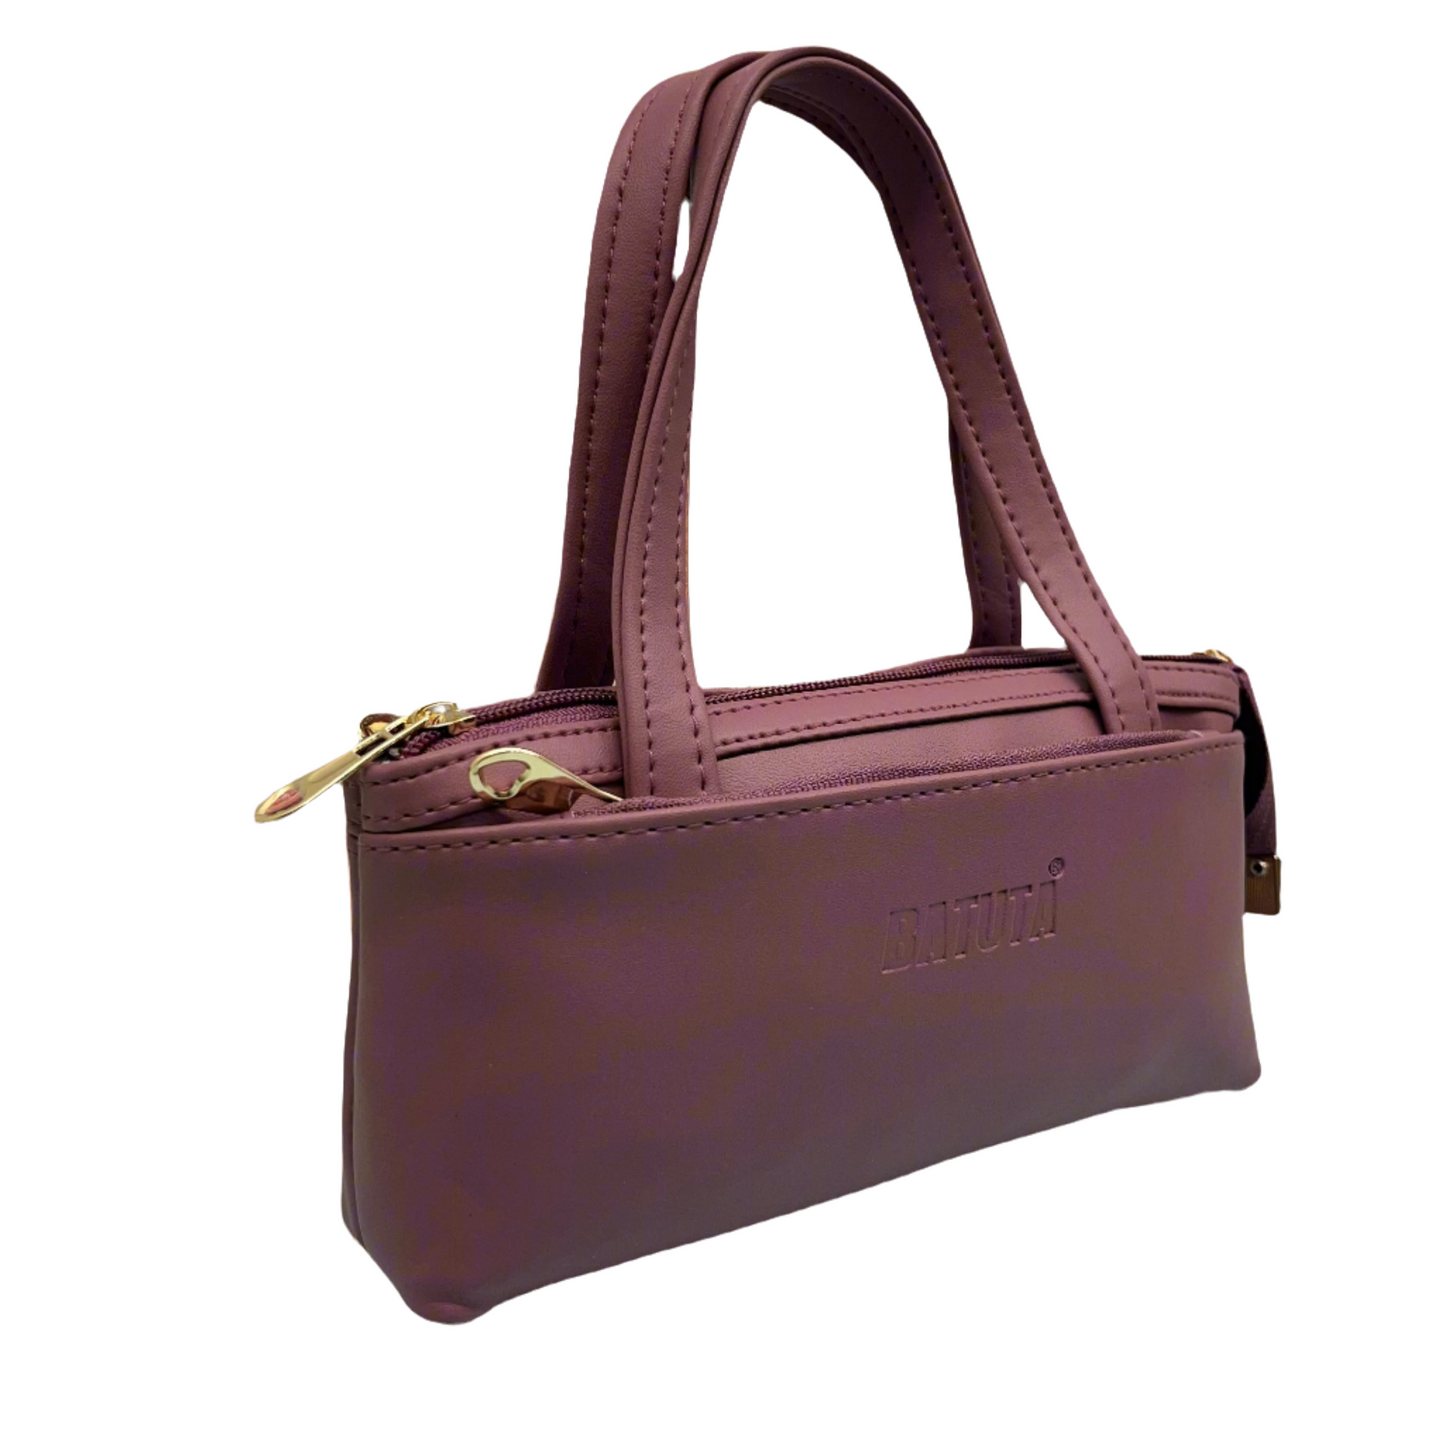 BATUTA HUB Attractive Women's Small Handbag